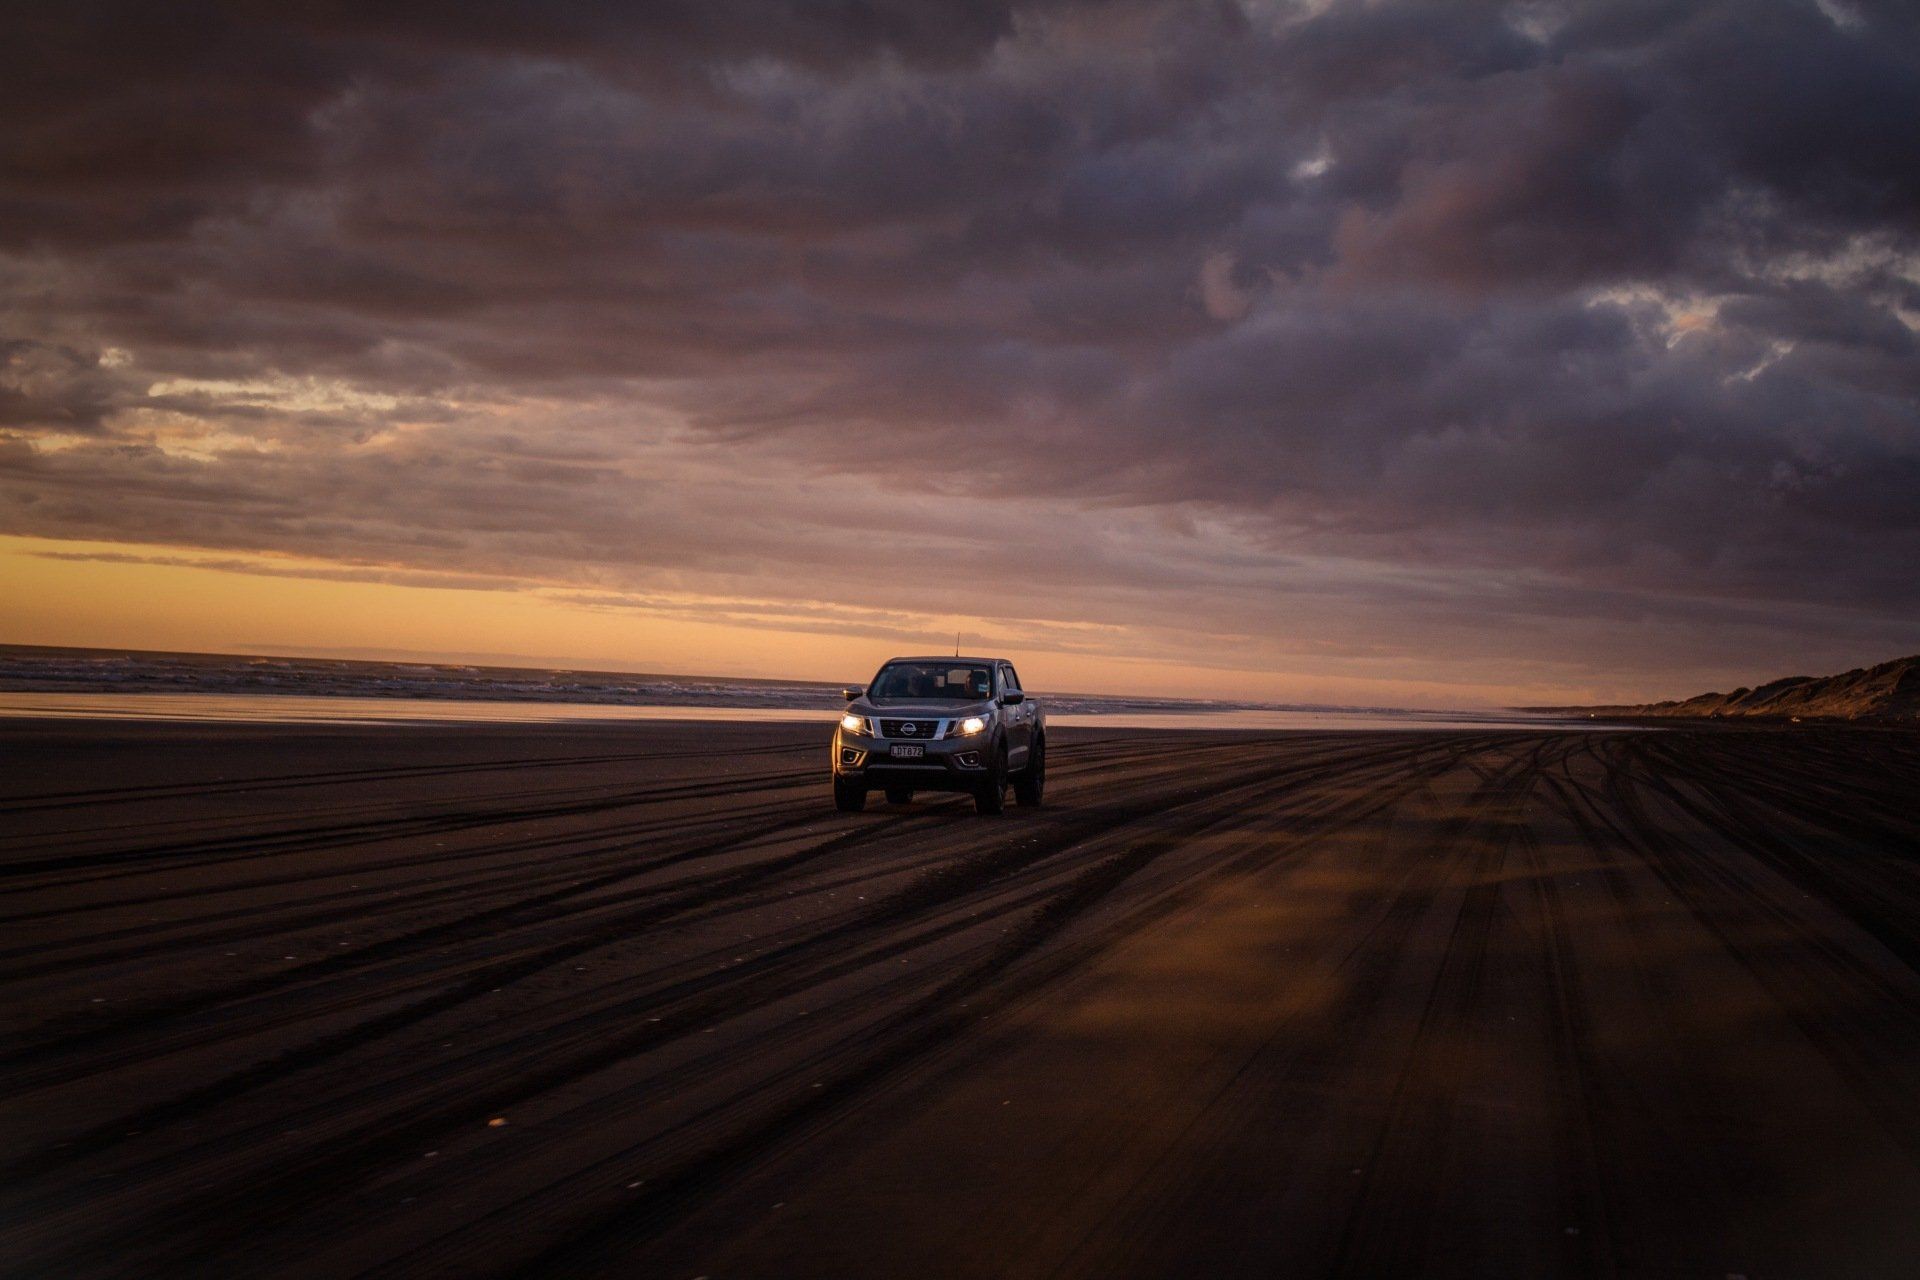 a car is driving on a dirt road near the ocean